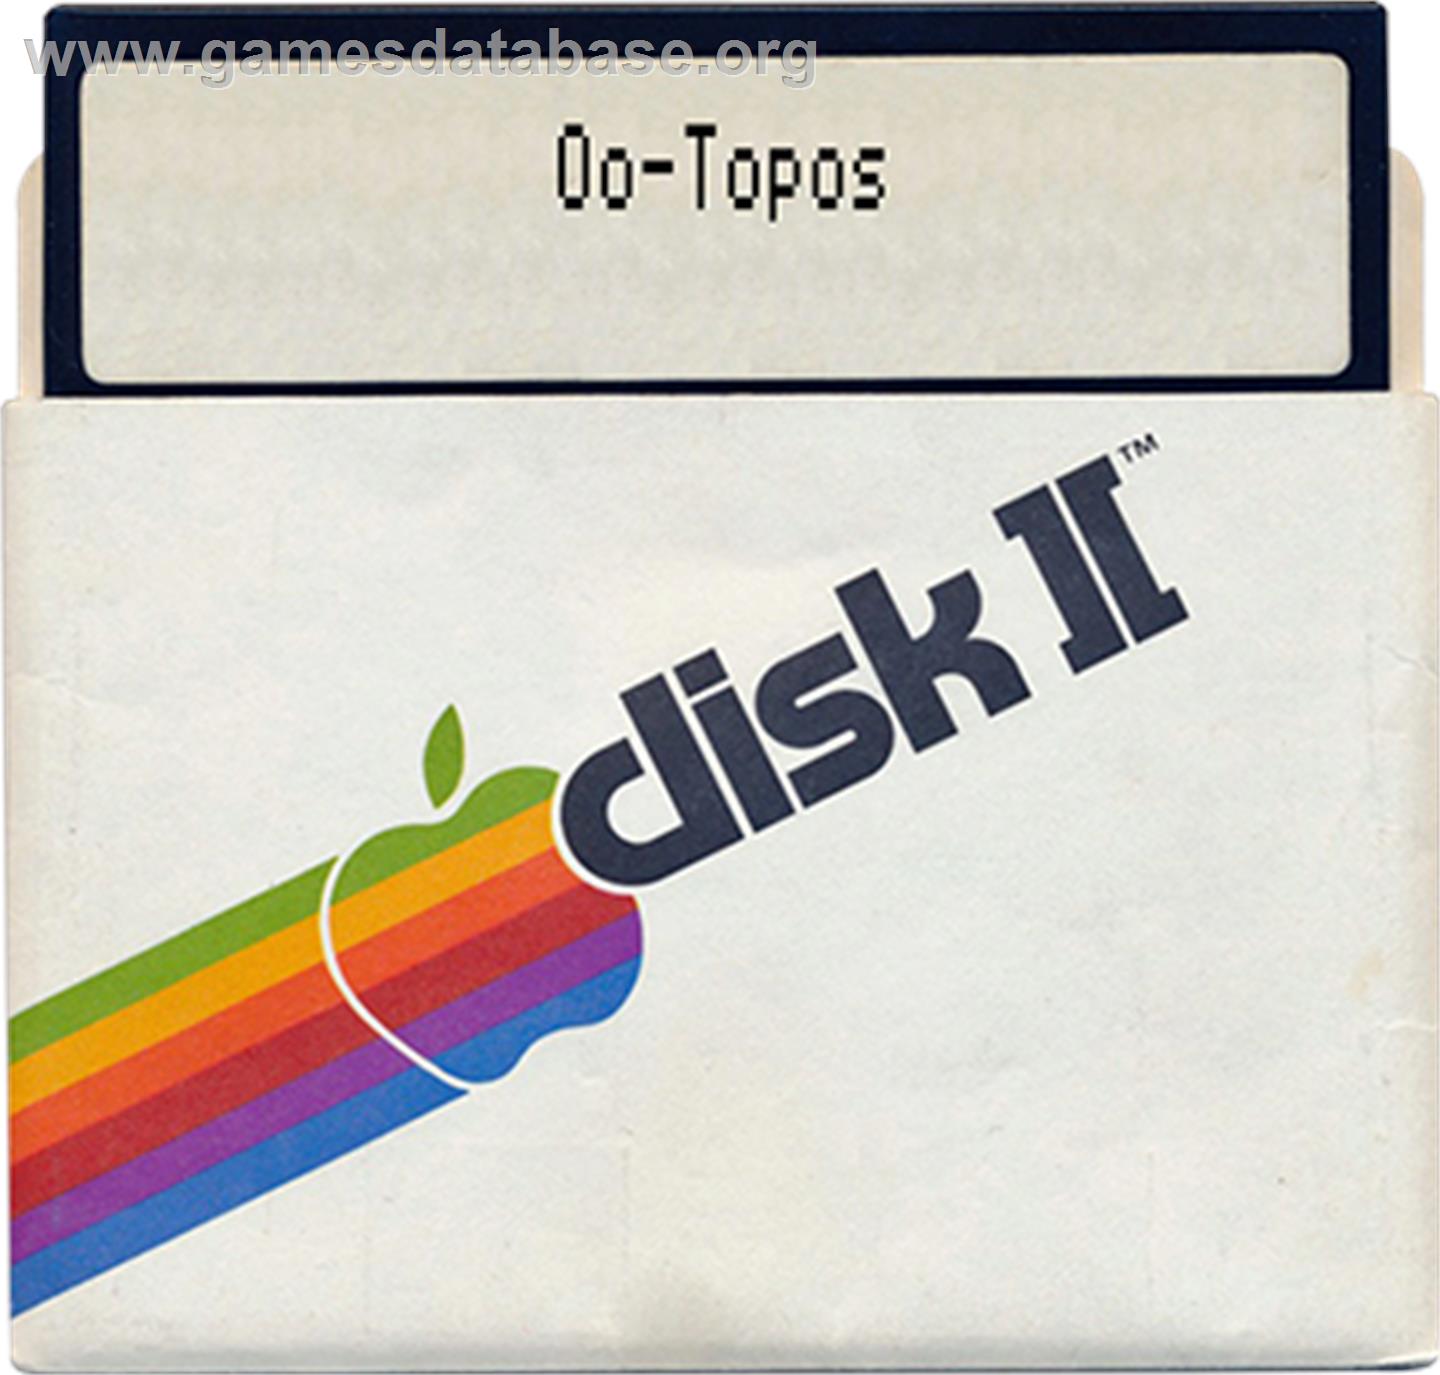 Oo-Topos - Apple II - Artwork - Disc